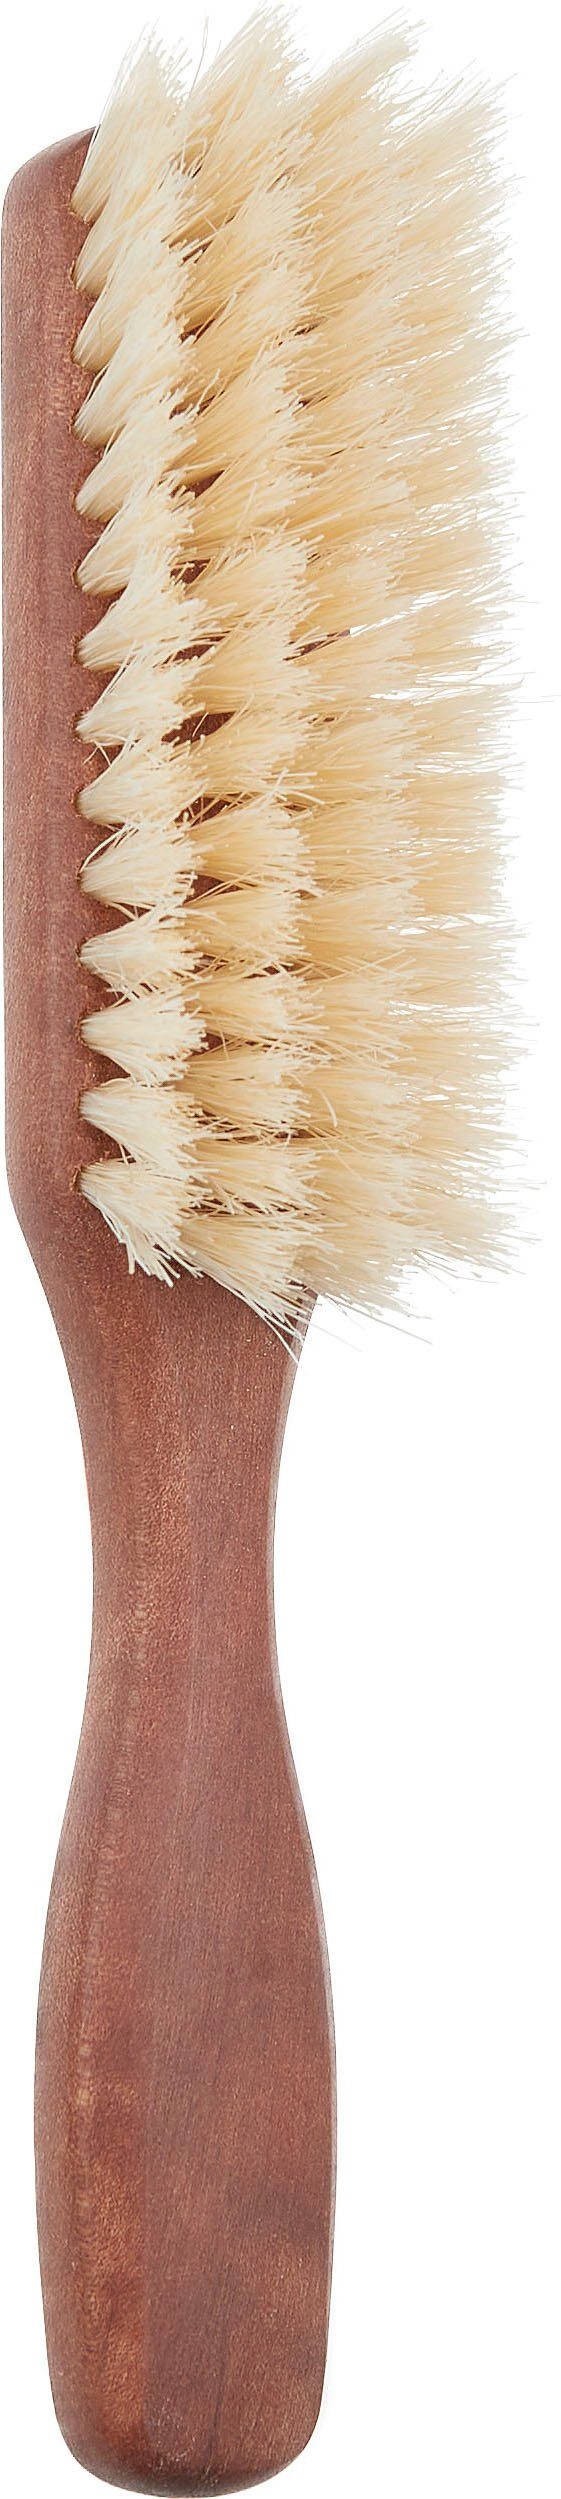 Regincós Haarbürste Fade Brush, 4-reihig | Haarbürsten